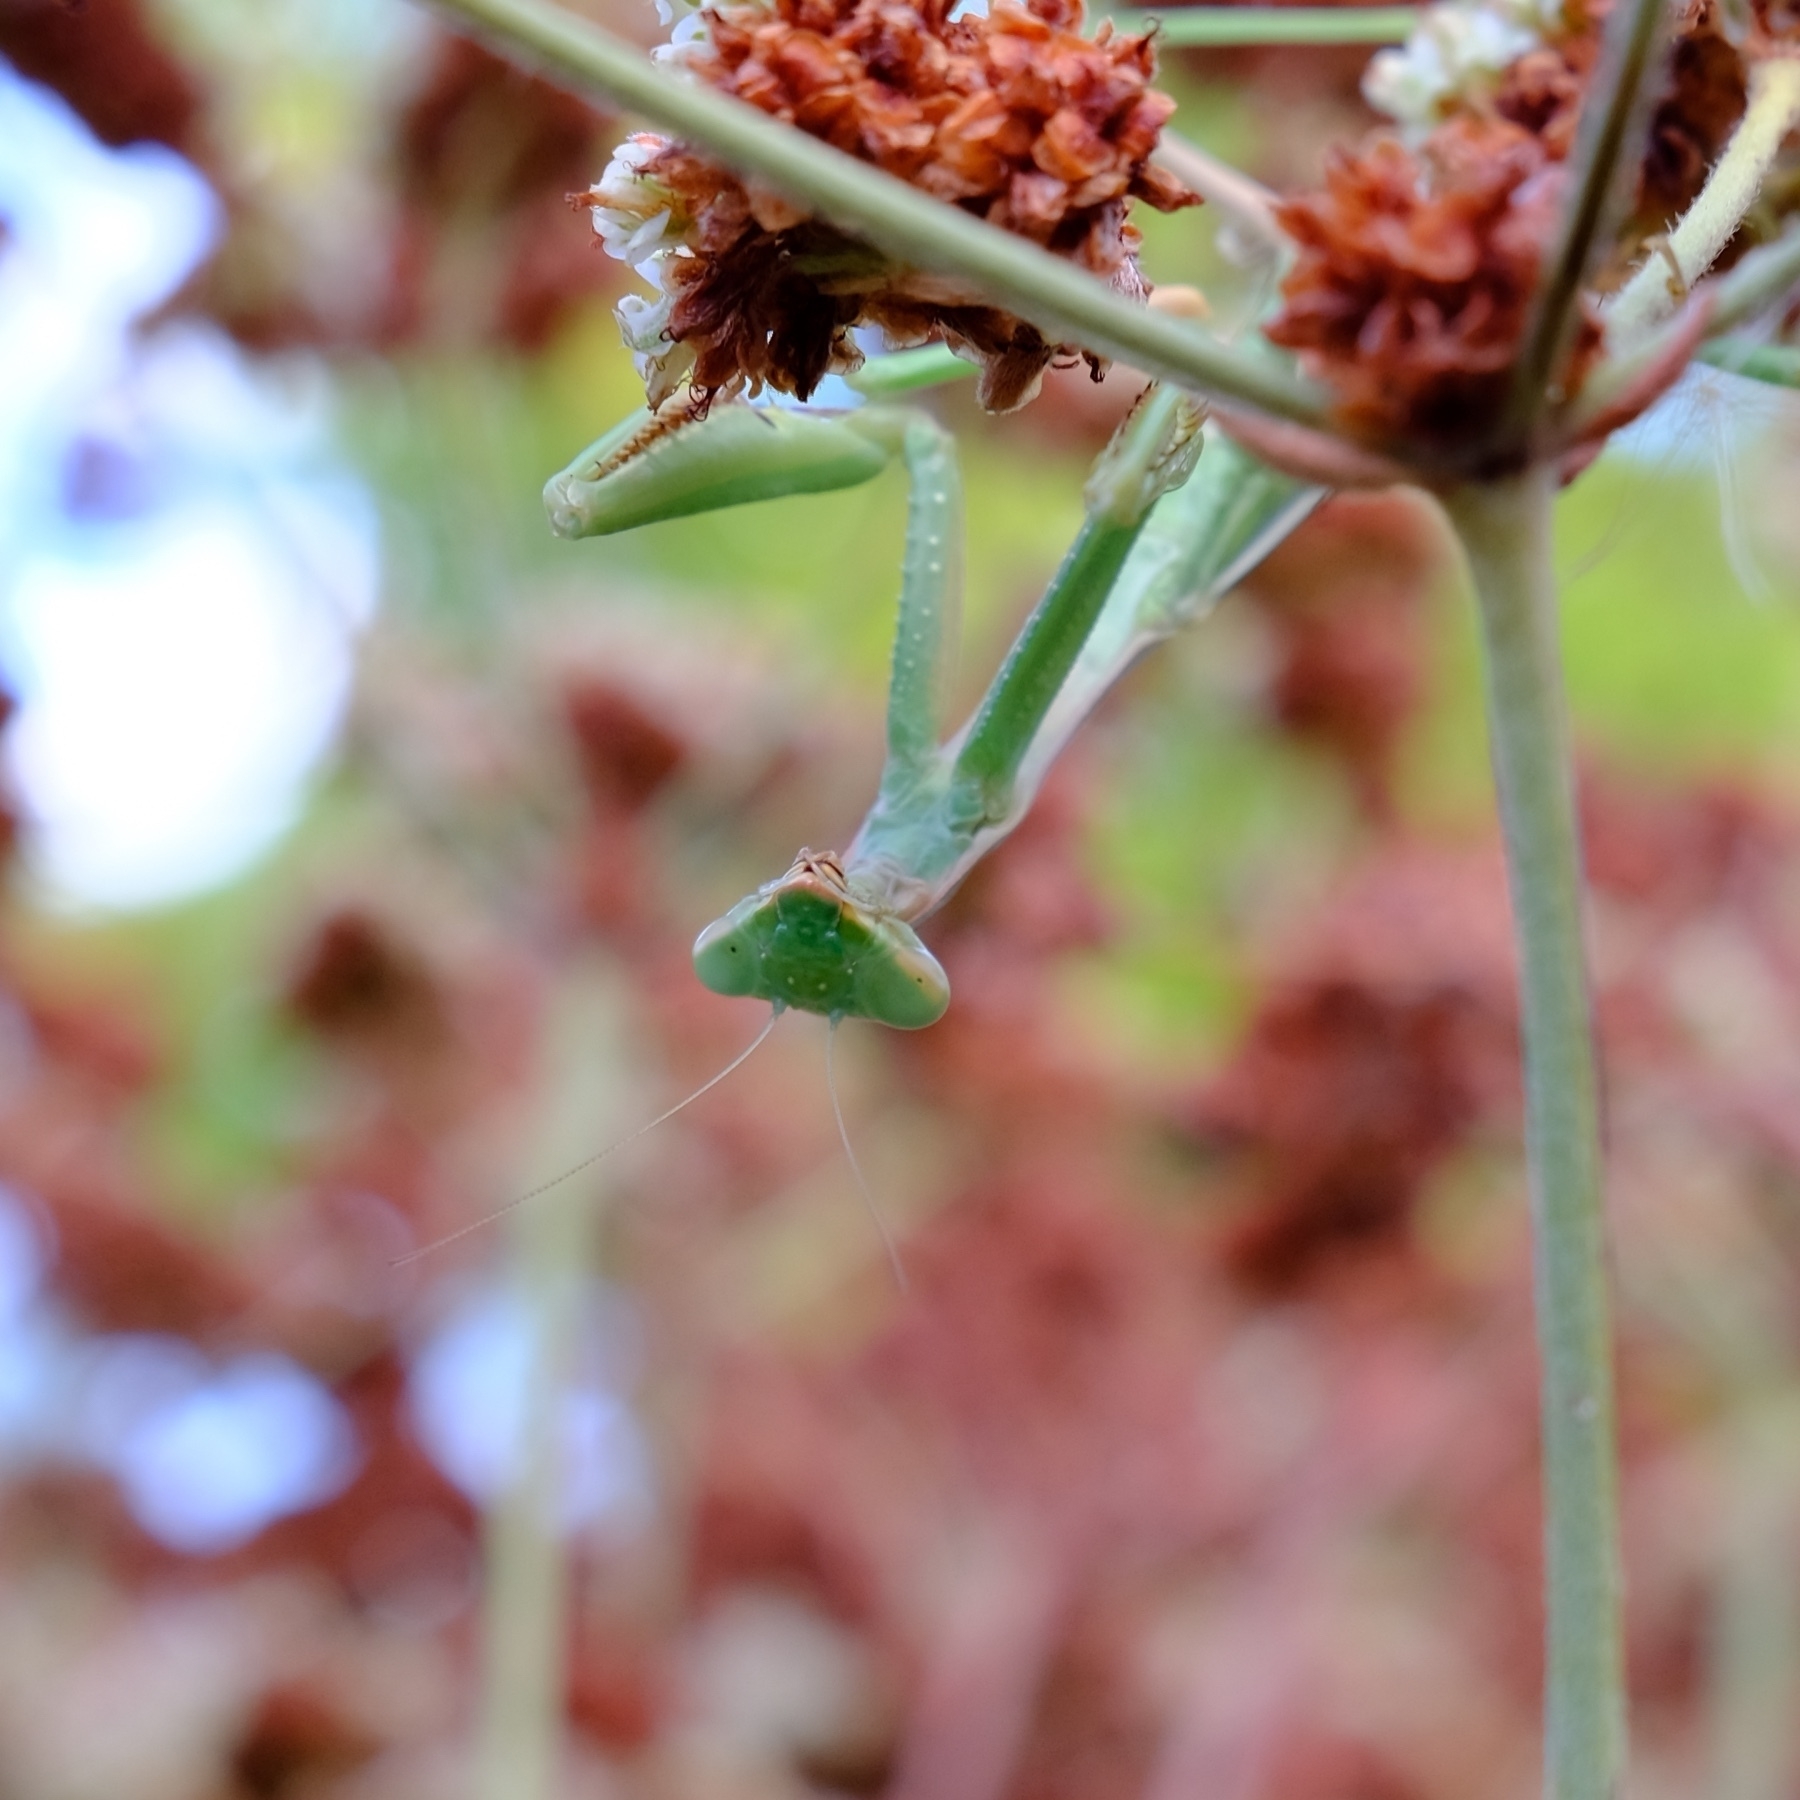 upside down mantis in california buckwheat